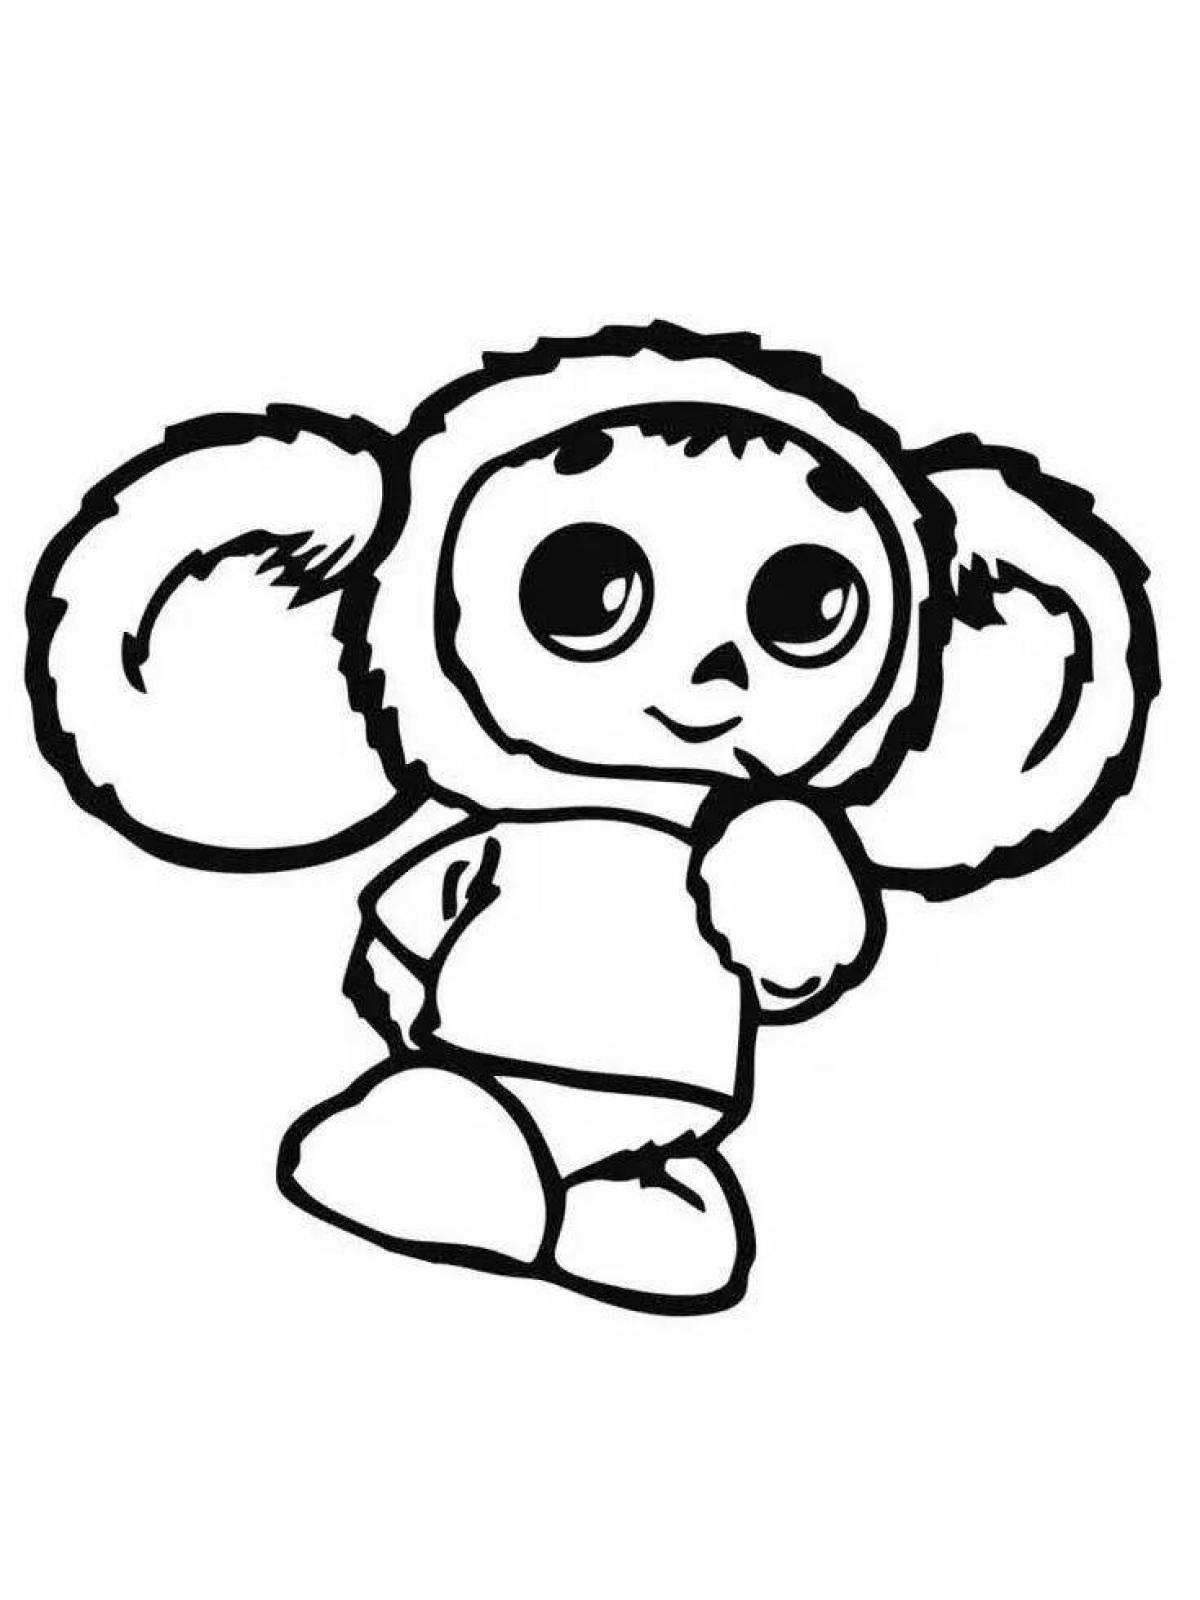 Fun coloring Cheburashka for the little ones